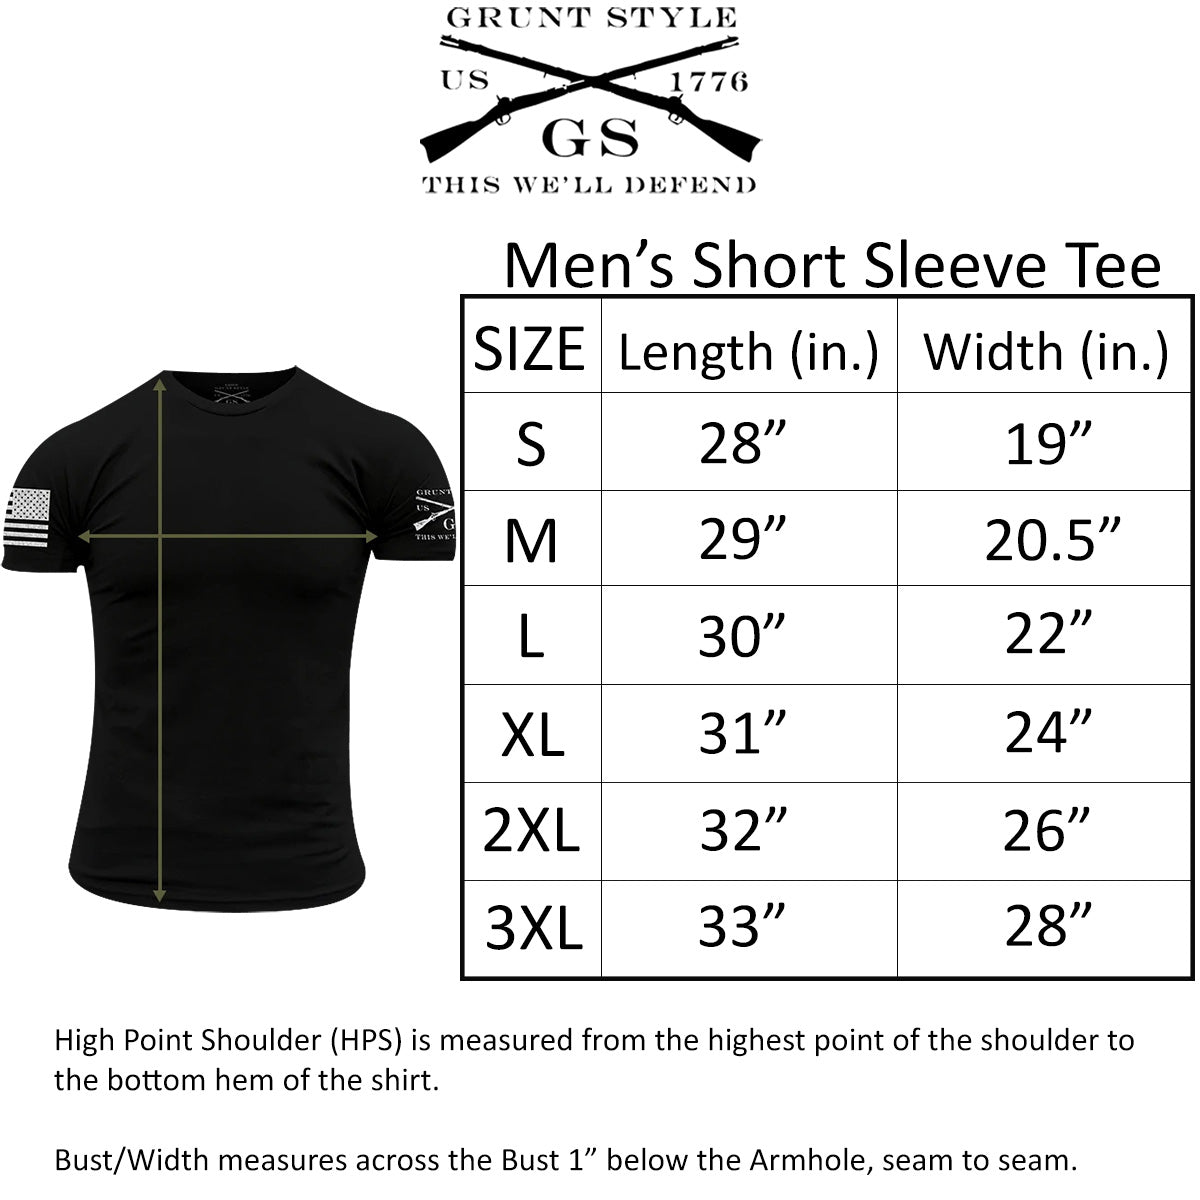 Grunt Style USMC - Est. 1775 T-Shirt - Red Grunt Style